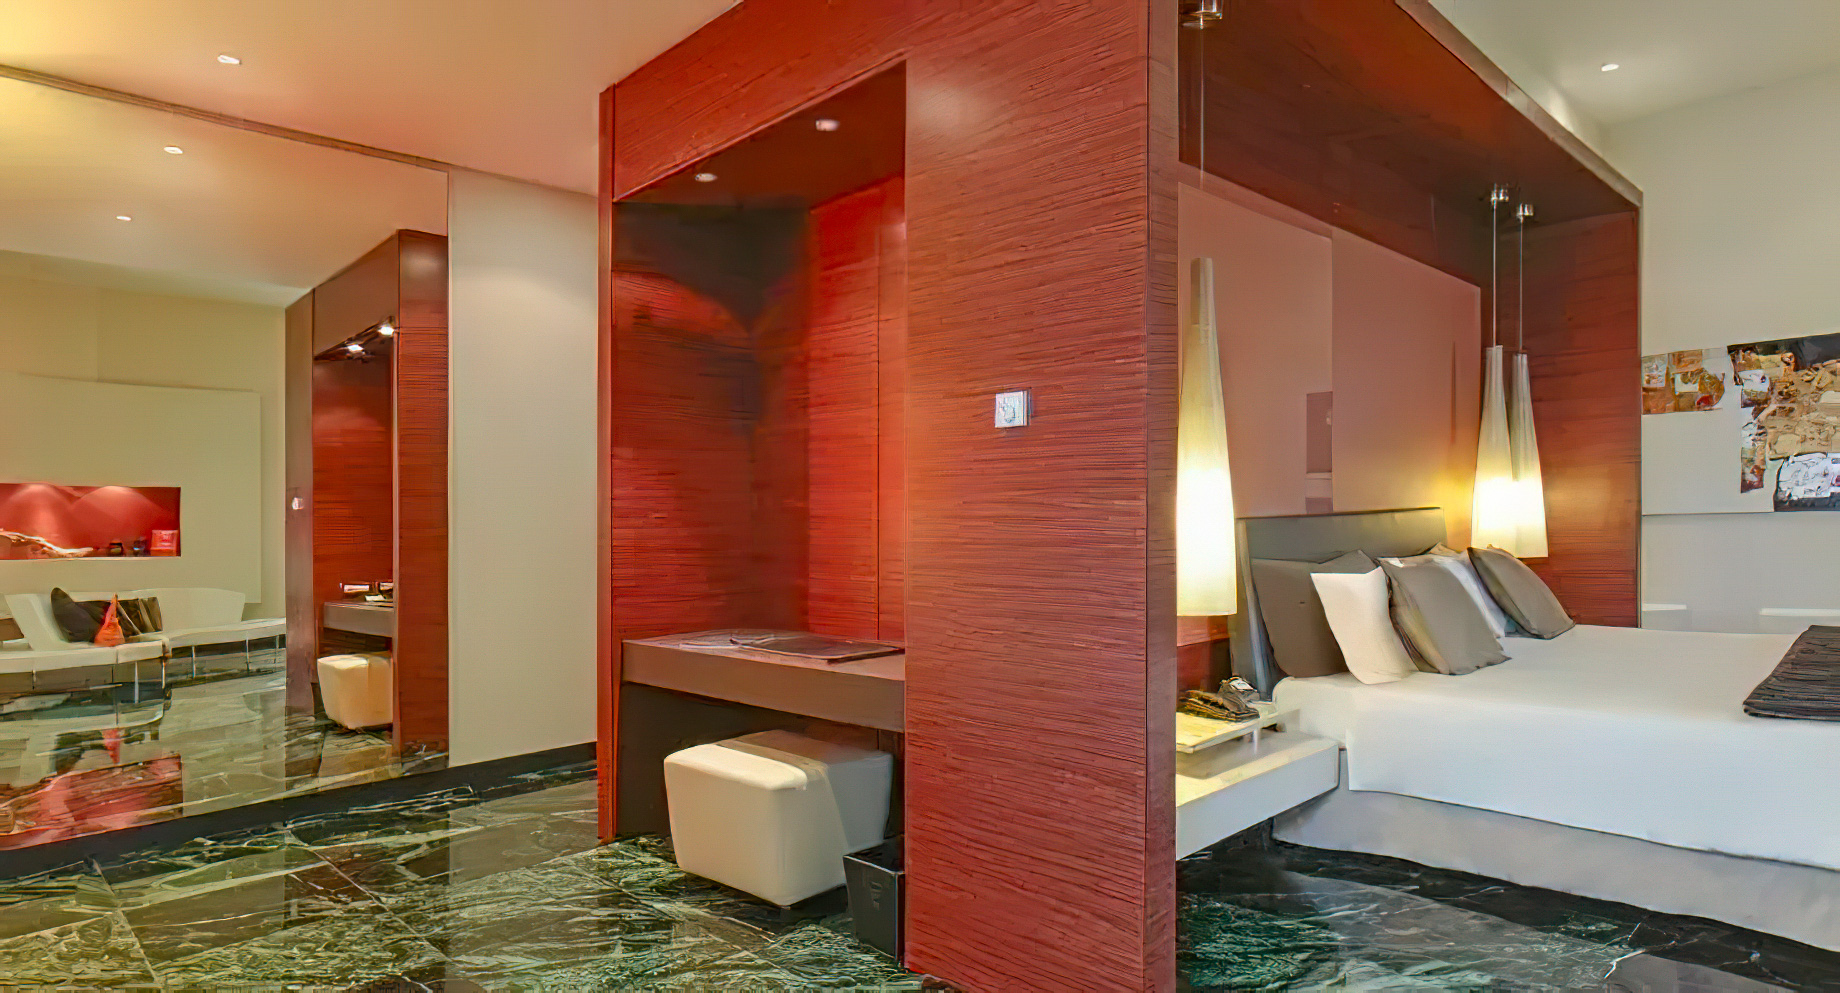 Anantara Palazzo Naiadi Rome Hotel - Rome, Italy - Executive Suite Bedroom